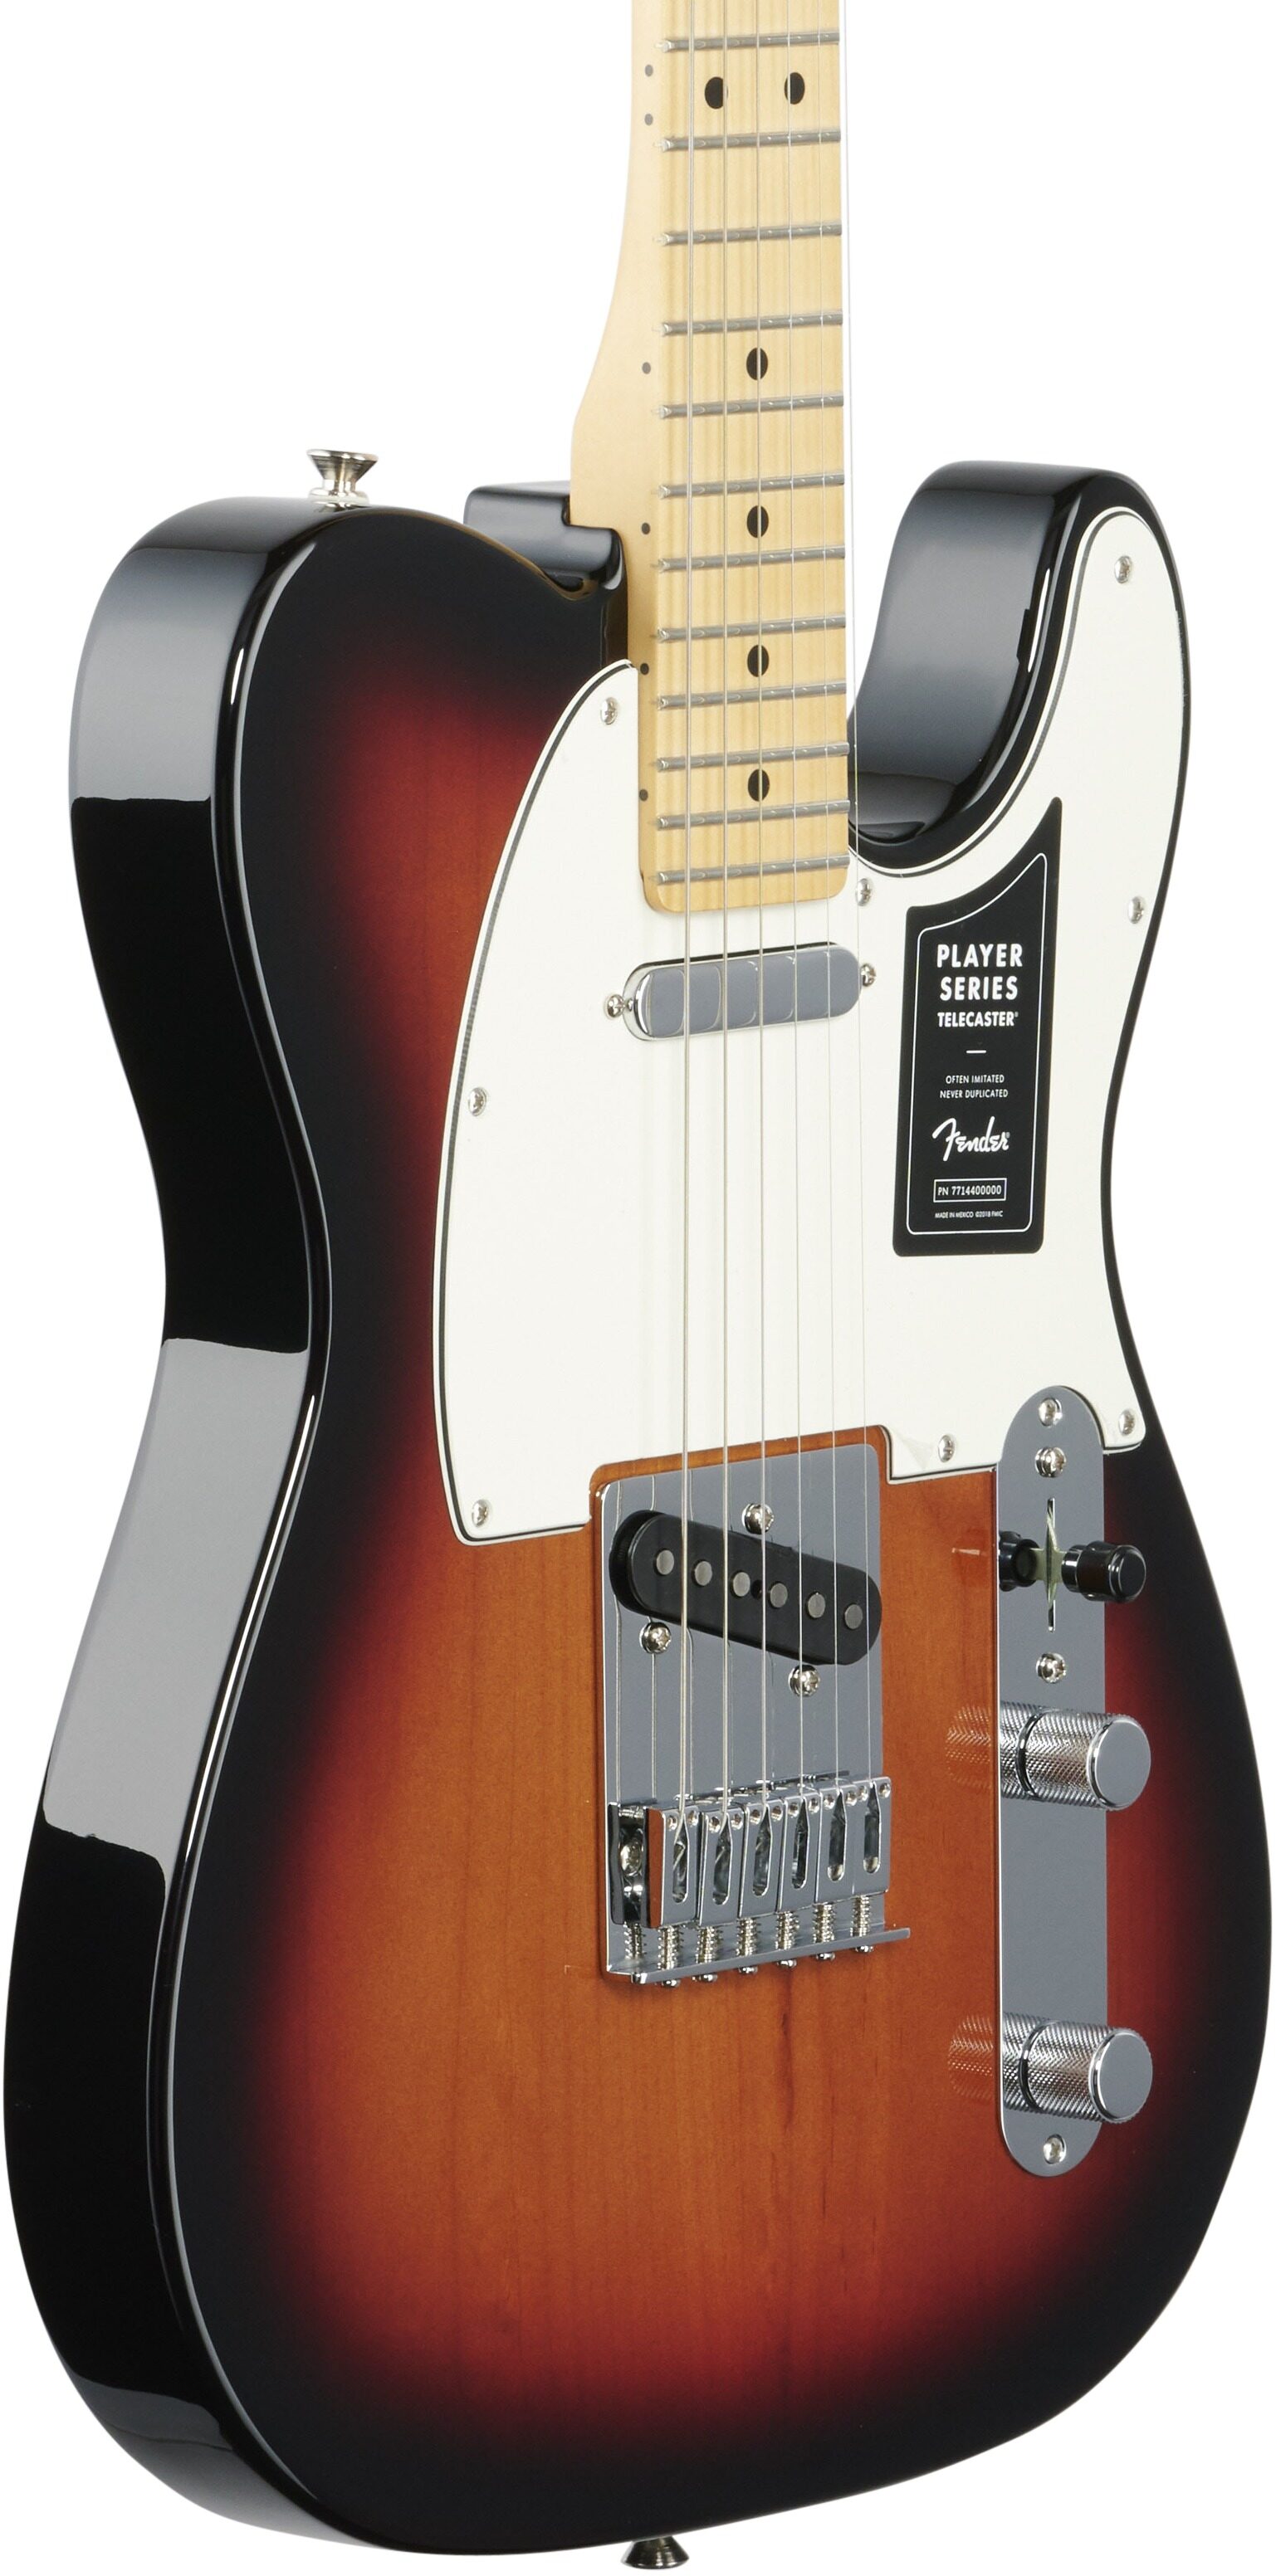 Fender Player Telecaster Electric Guitar, Maple Fingerboard